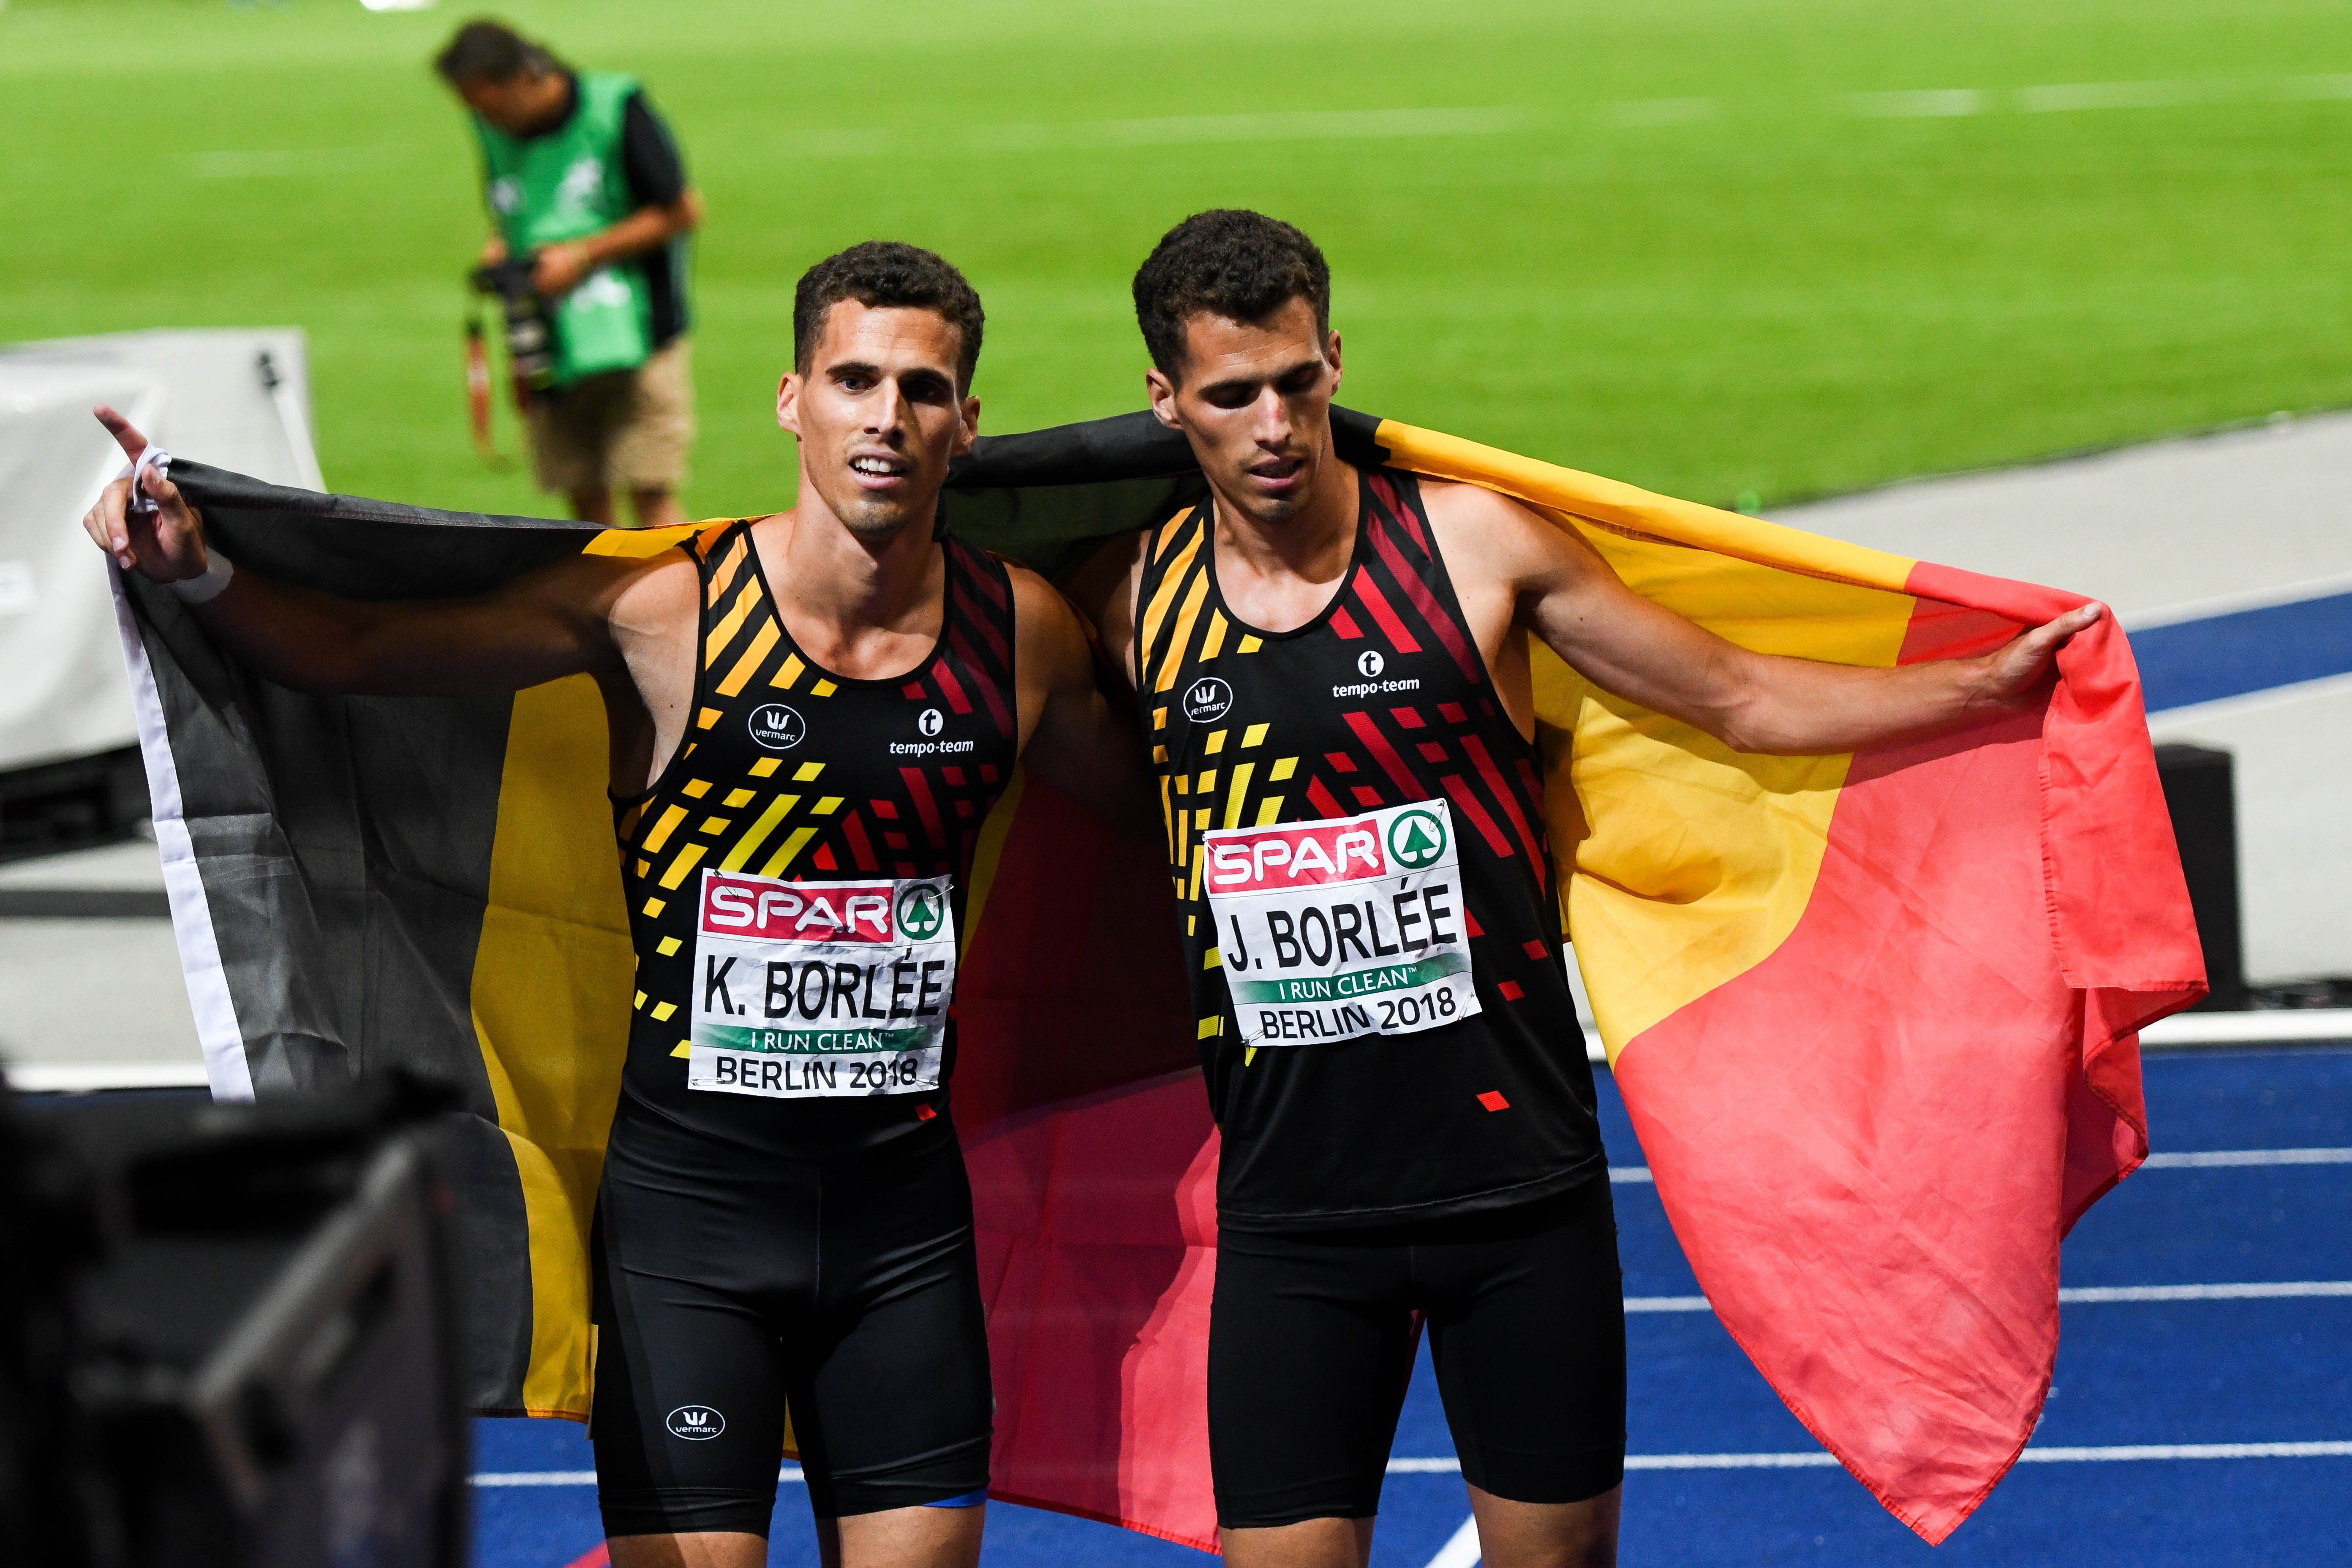 Jonathan en Kevin Borlee 400m Berlijn 2018